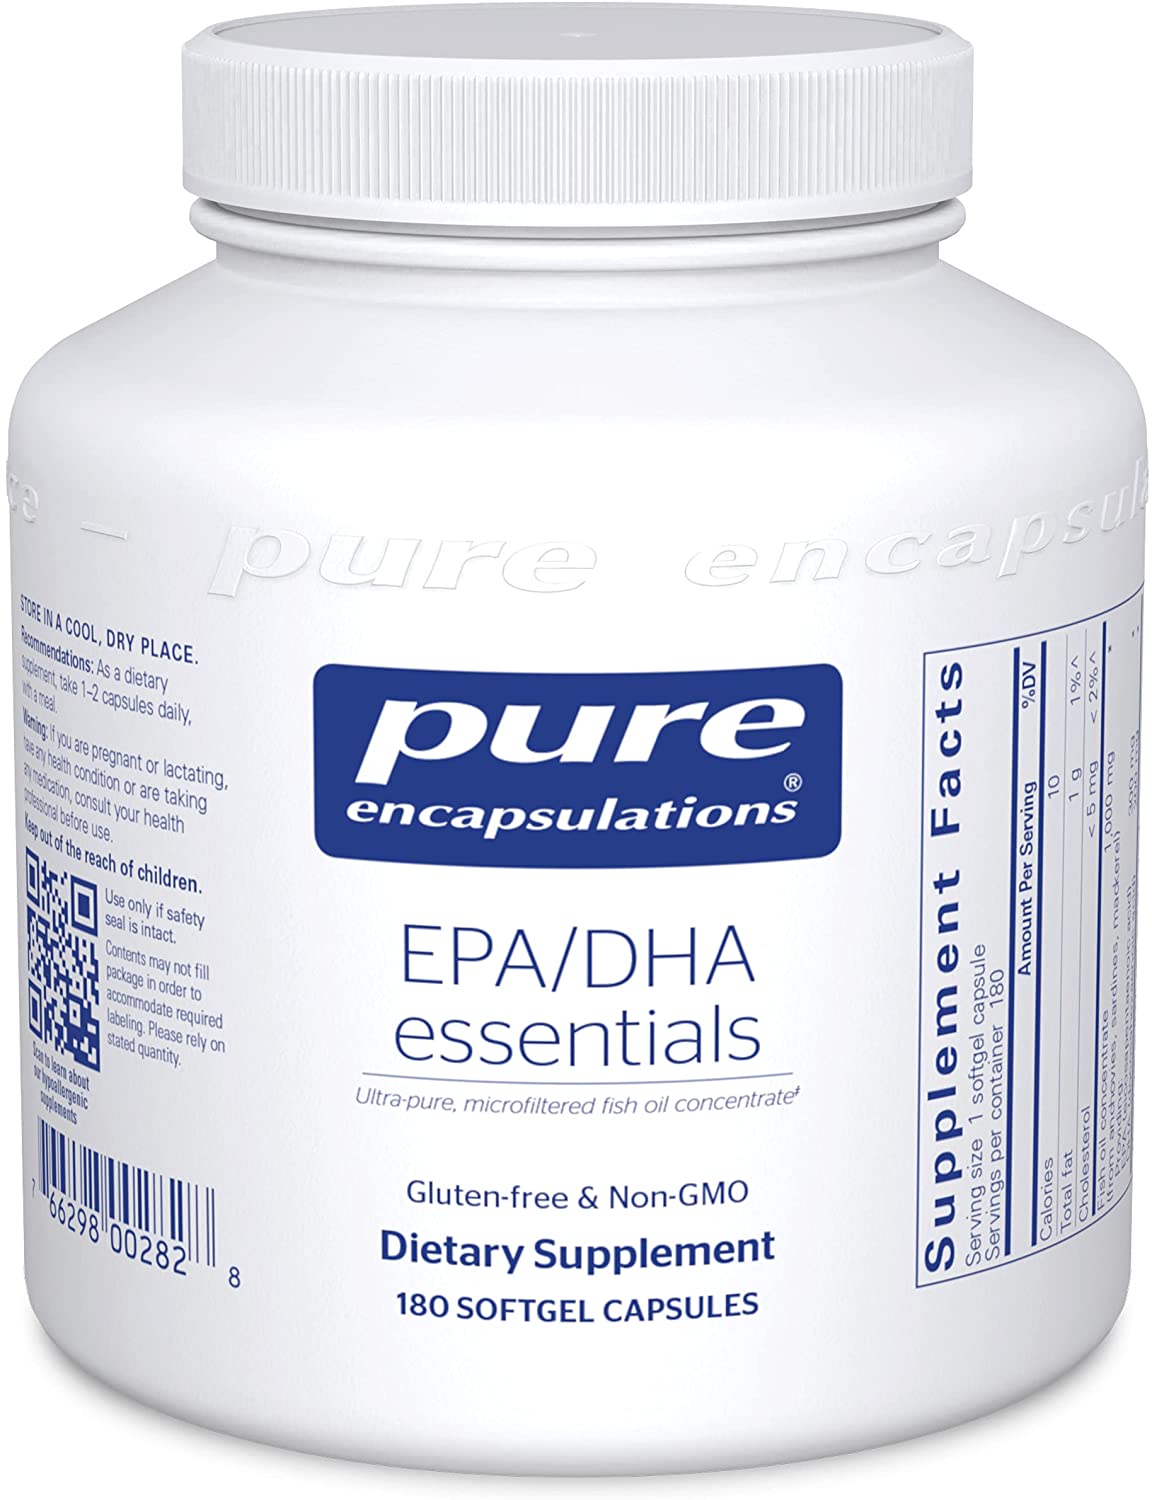 EPA-DHA-Essentials-1000mg-180s